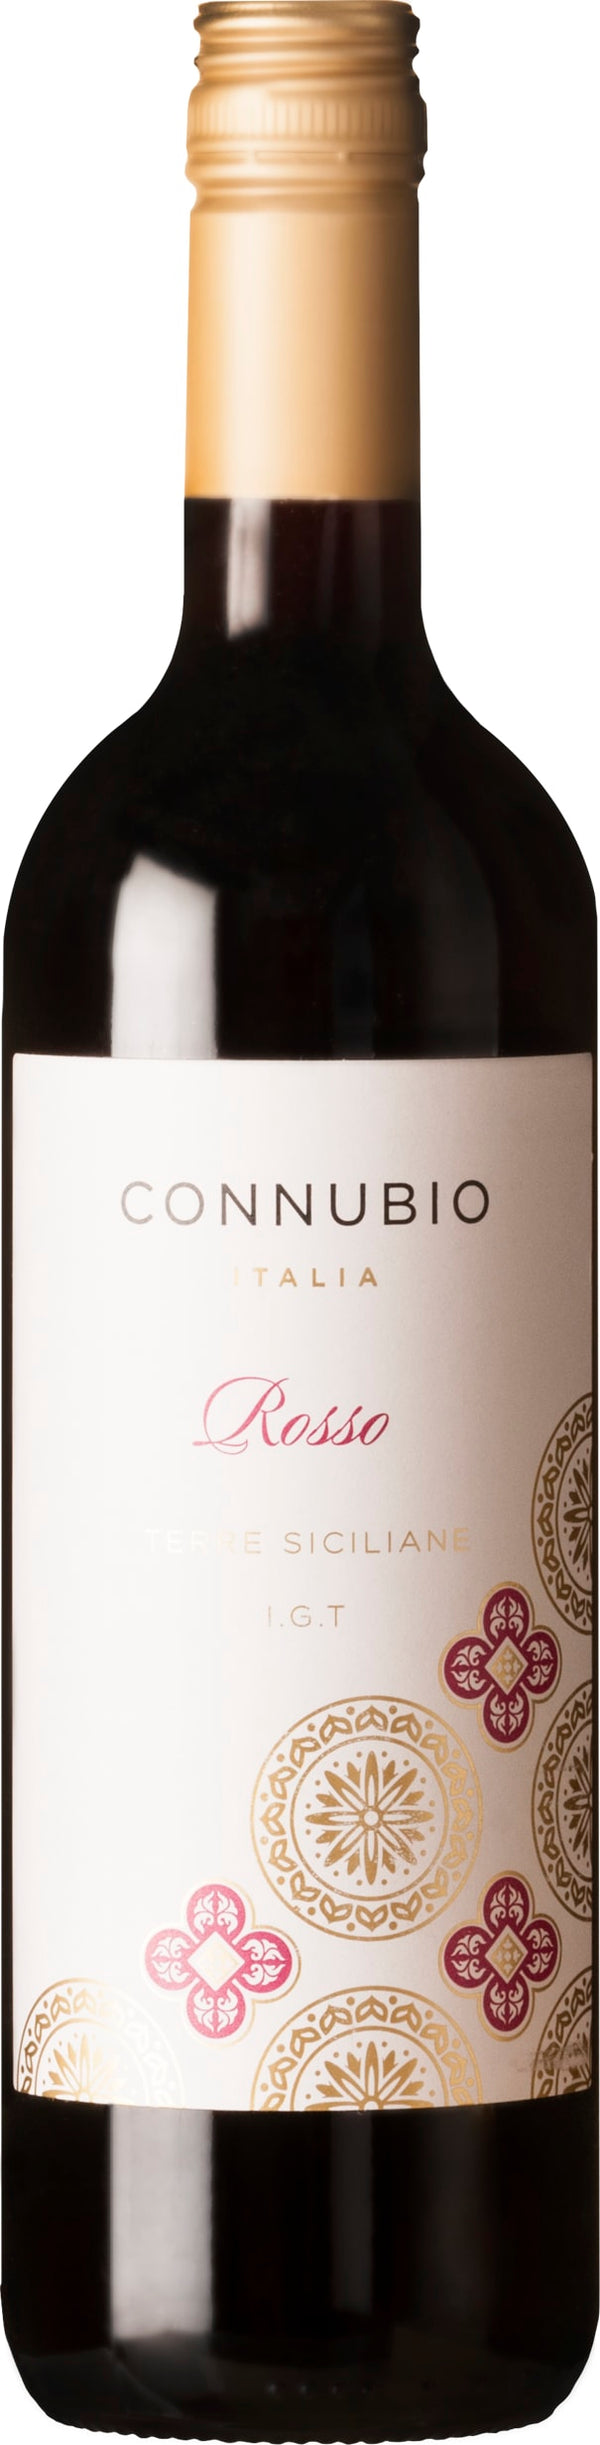 Rosso IGT Terre Siciliane 22 Connubio 6x75cl - Just Wines 